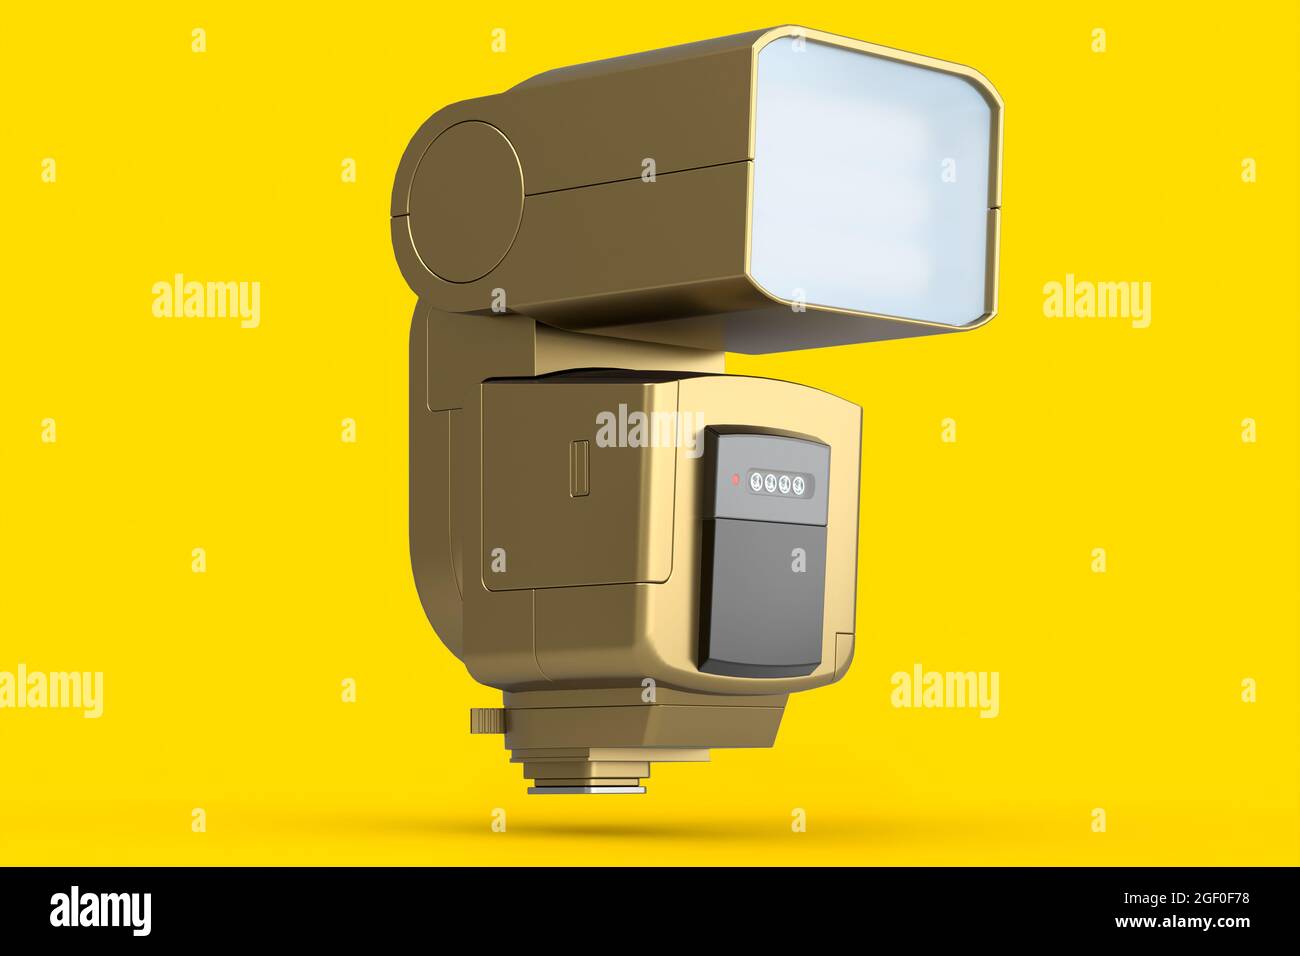 flash externo dorado de la cámara speedlight aislado sobre fondo amarillo. 3D Representación e ilustración de equipos profesionales como estudio profesional Foto de stock